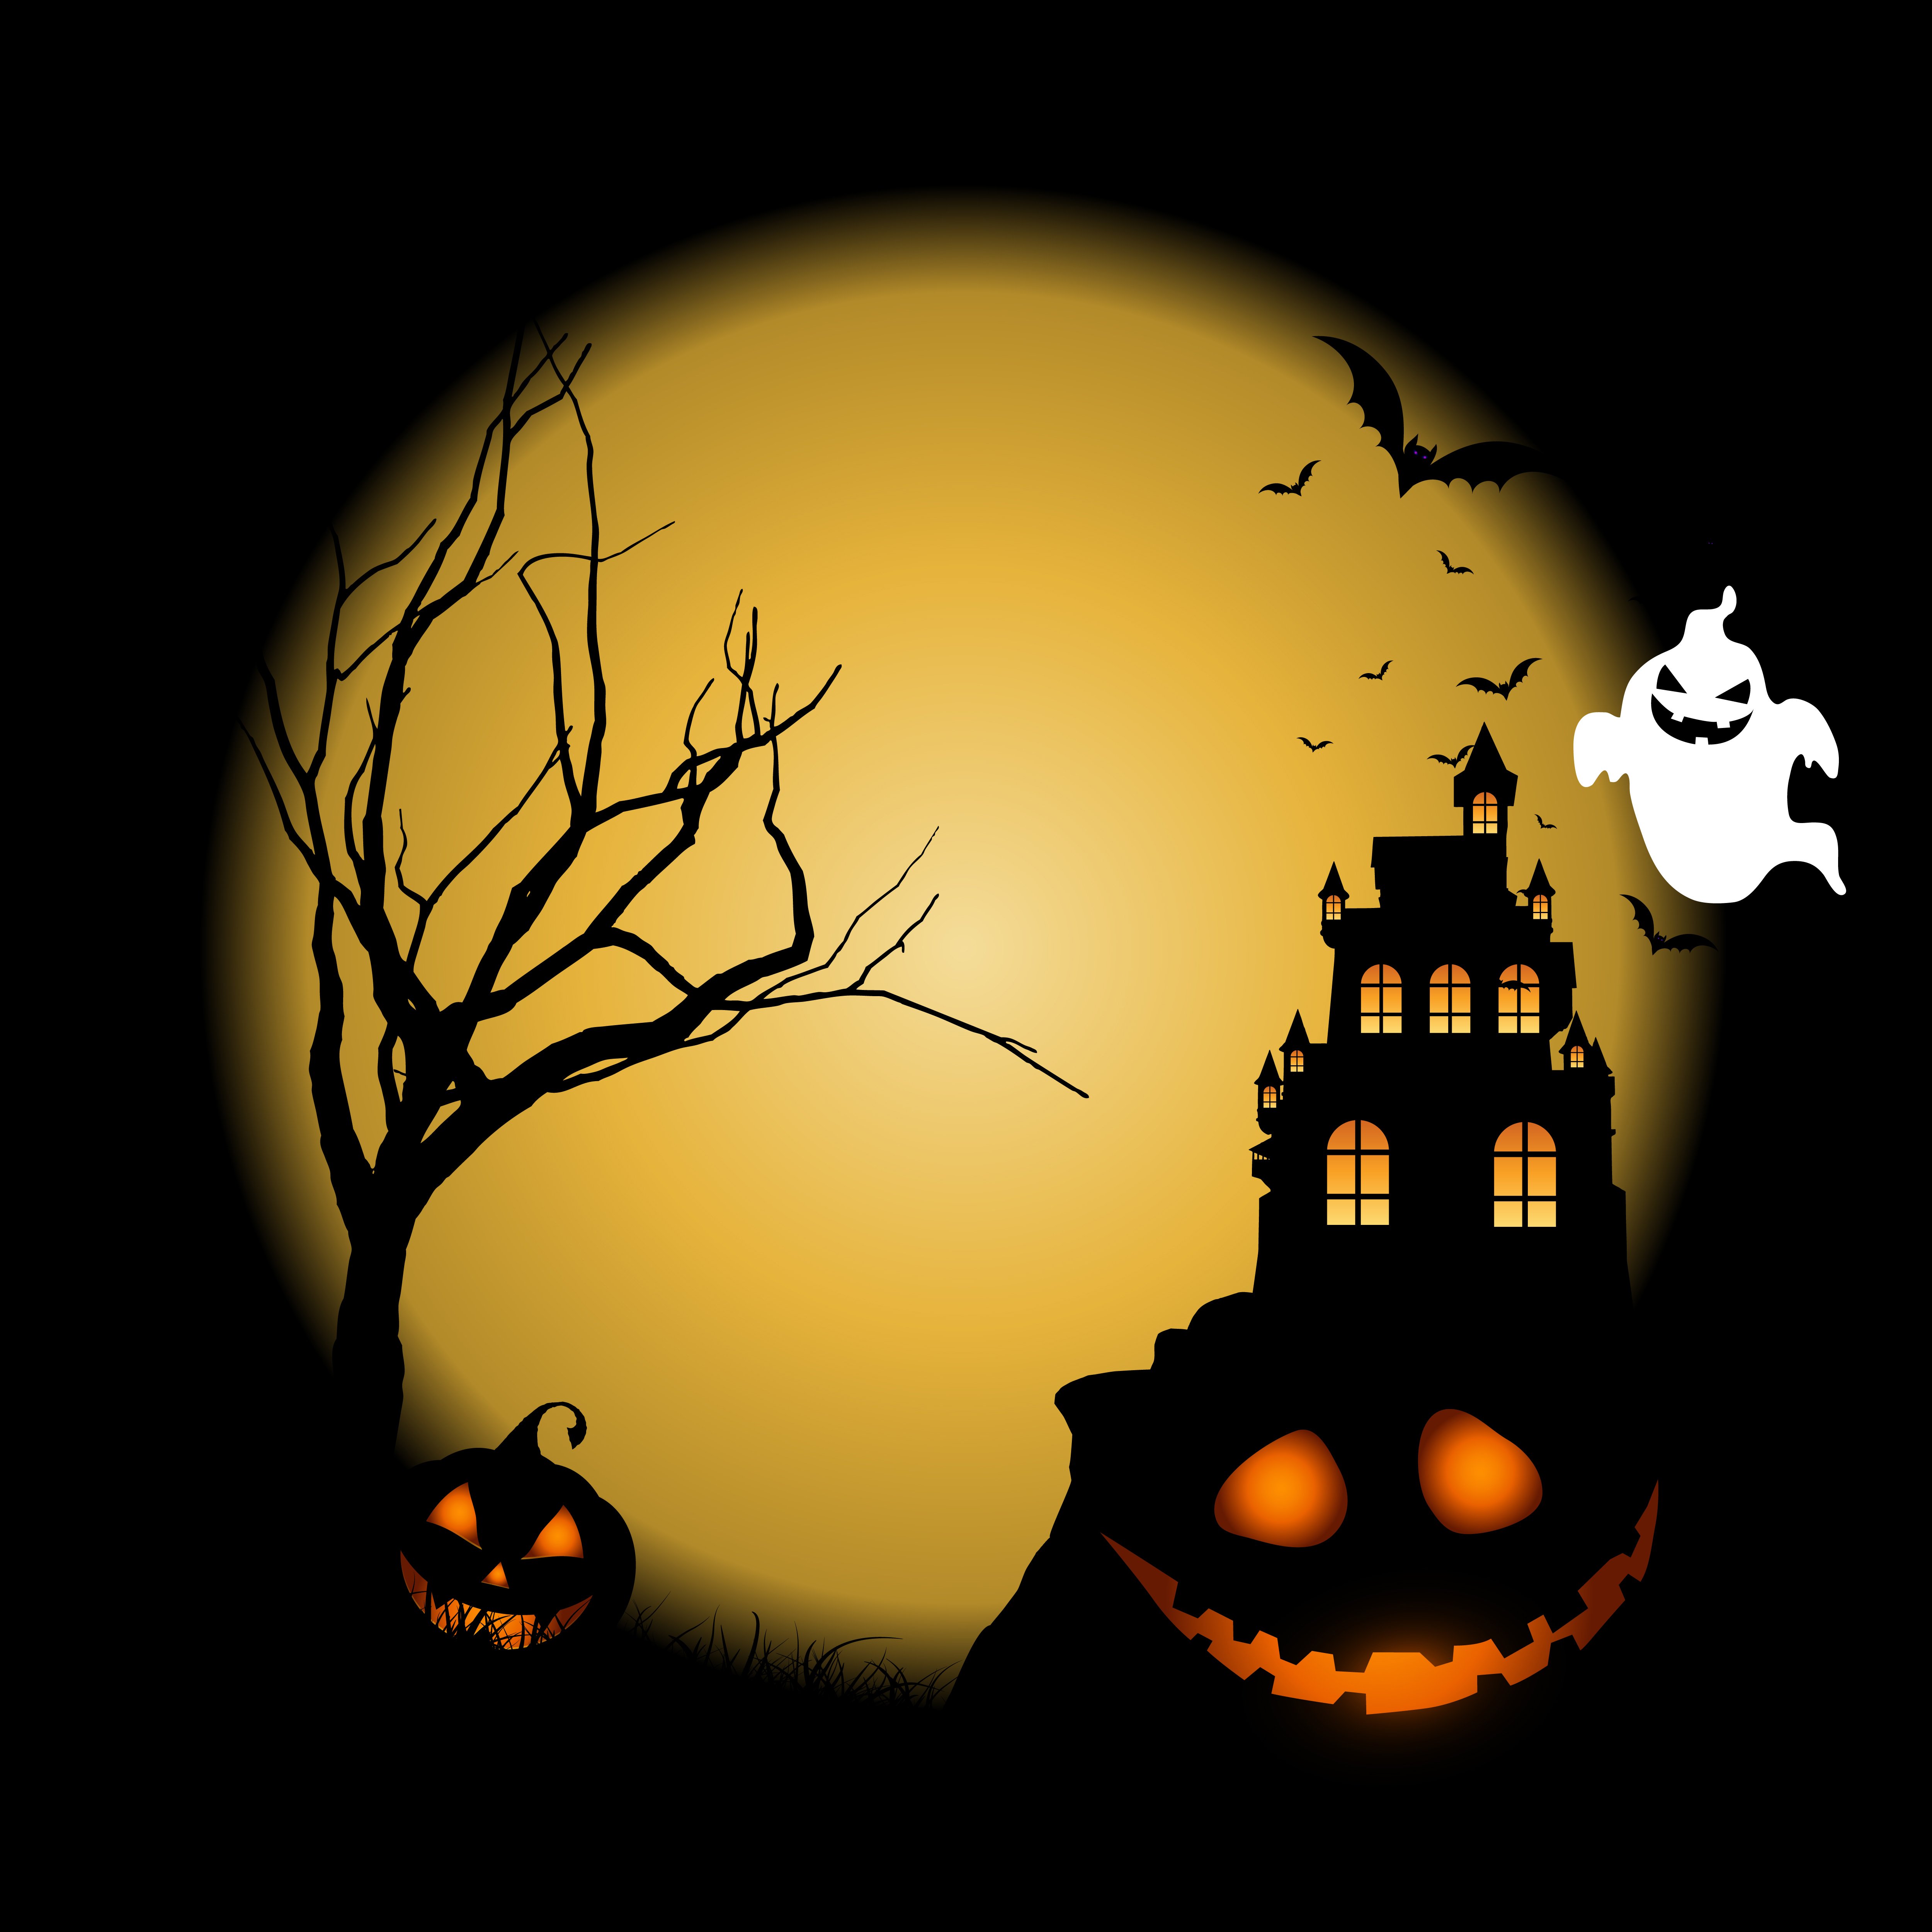 Halloween background with pumpkins against castle landscape